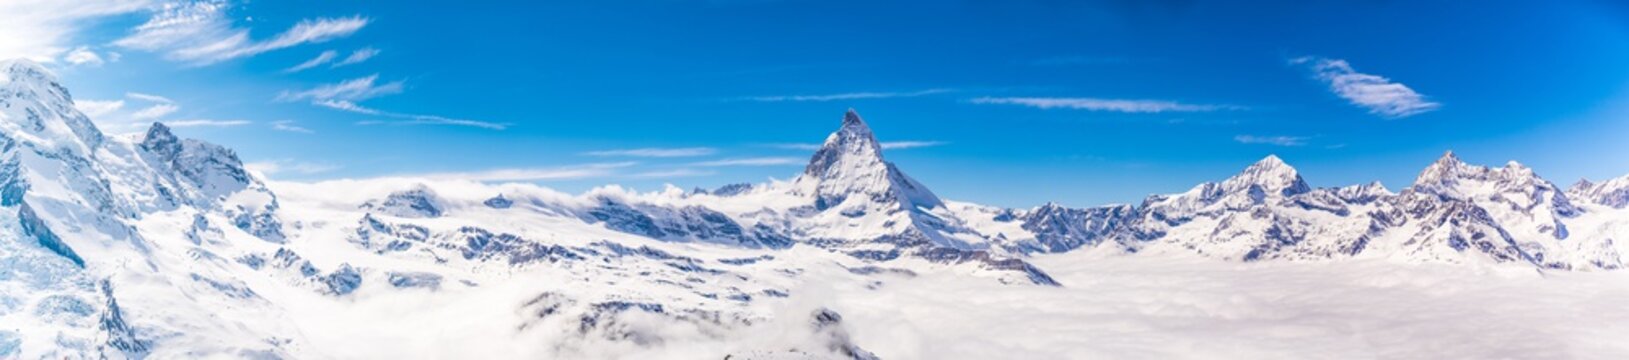 Fototapeta Matterhorn and snow mountains panorama view at Gornergrat, Switzerland